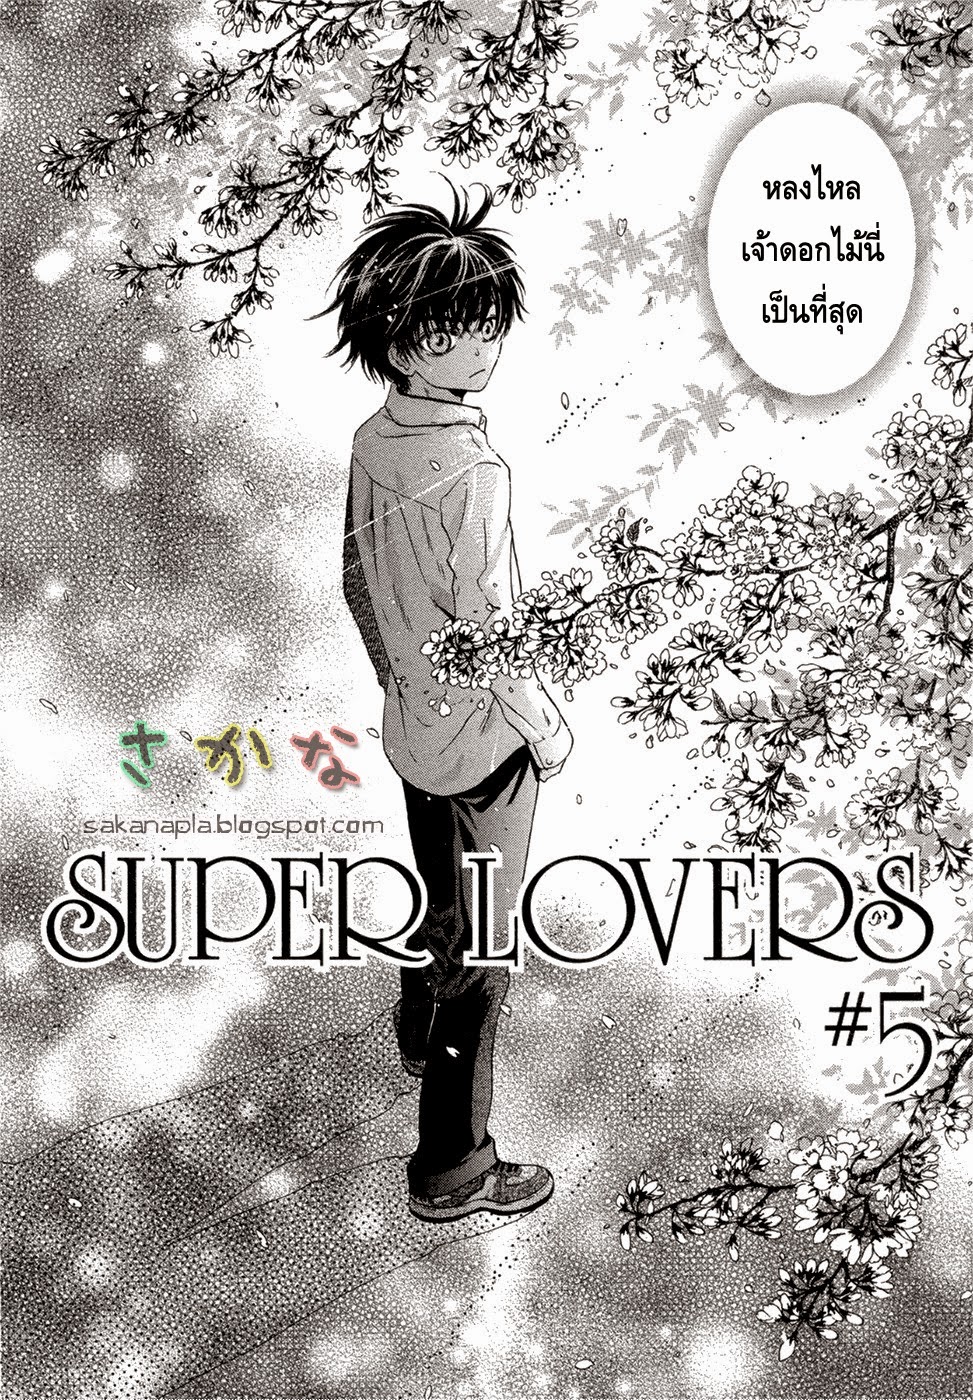 Super Lovers 5 02